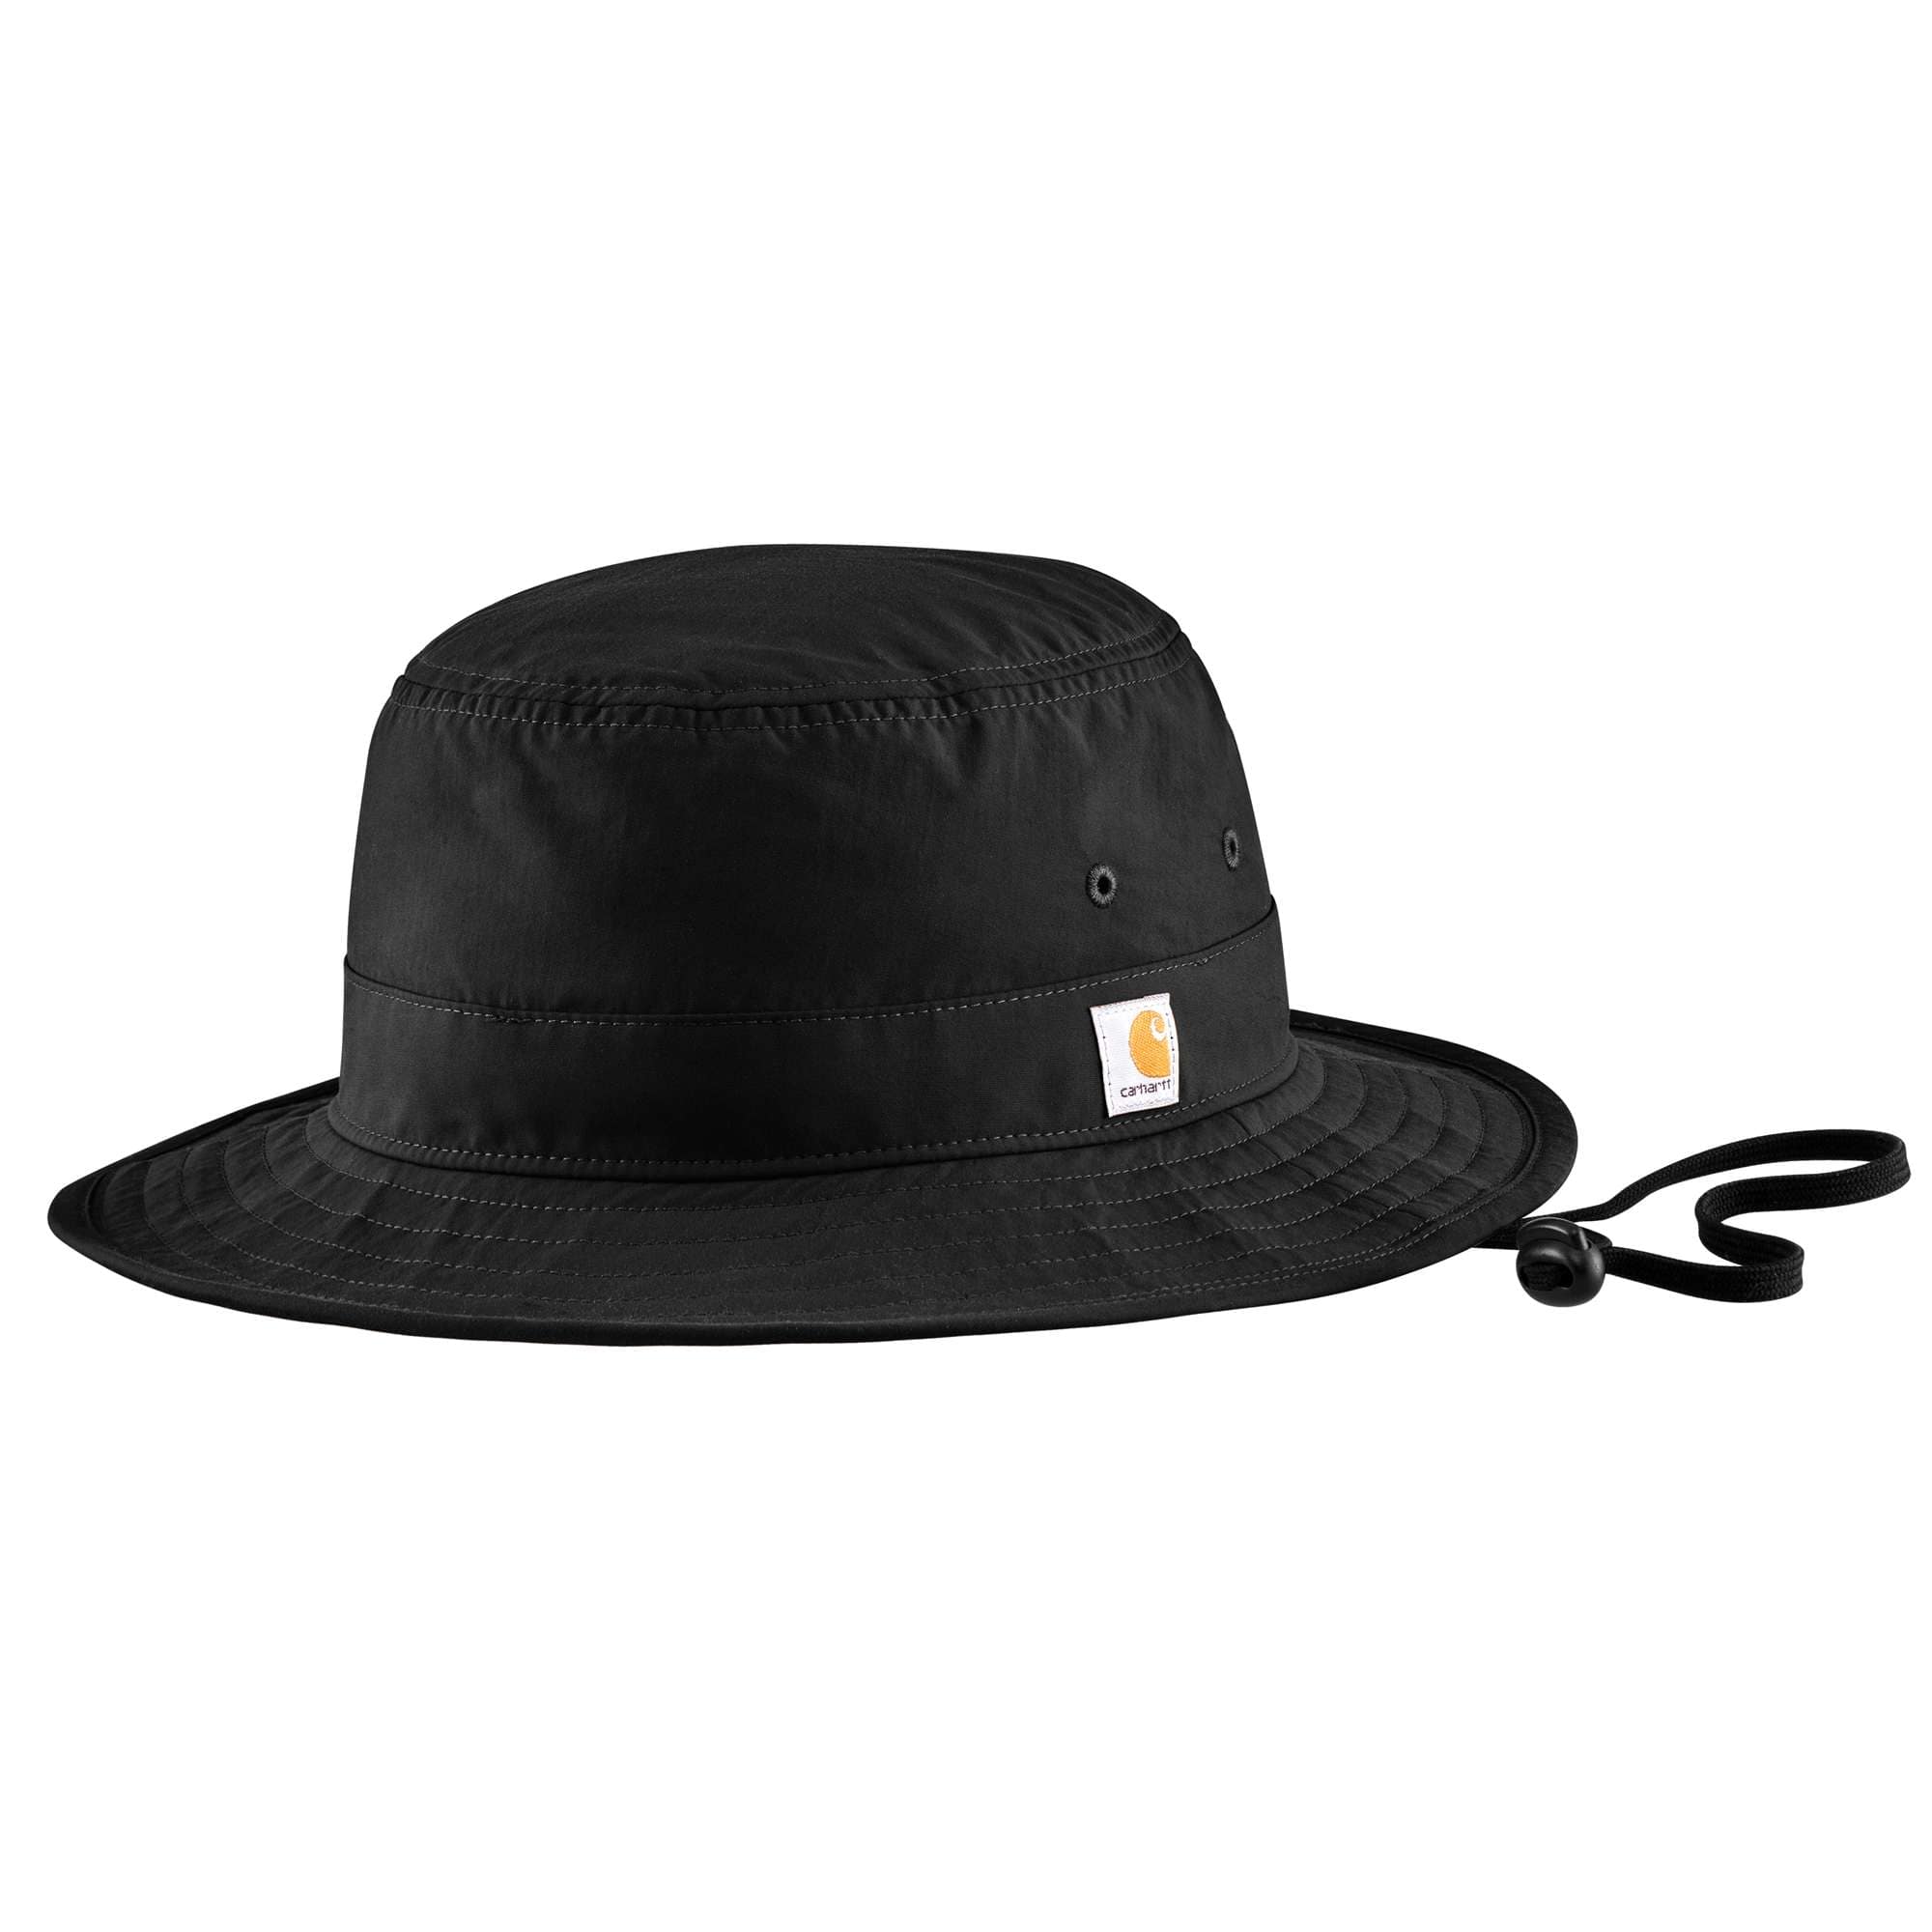 Carhartt Rain Defender Lightweight Bucket Hat in Brown